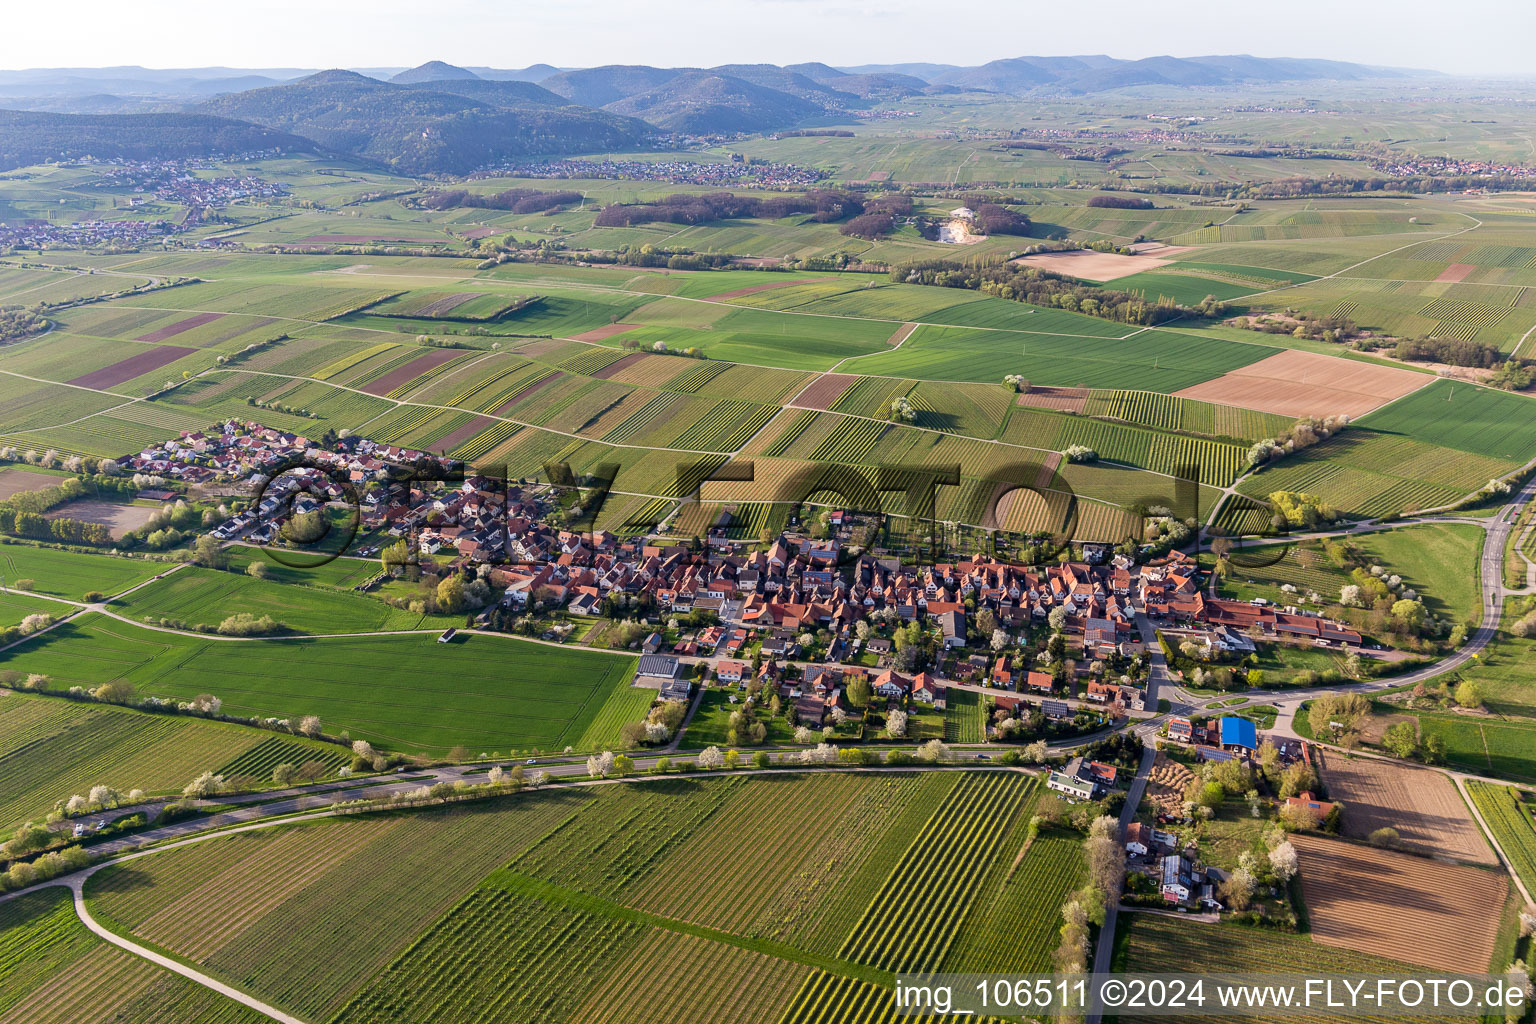 Bird's eye view of Niederhorbach in the state Rhineland-Palatinate, Germany